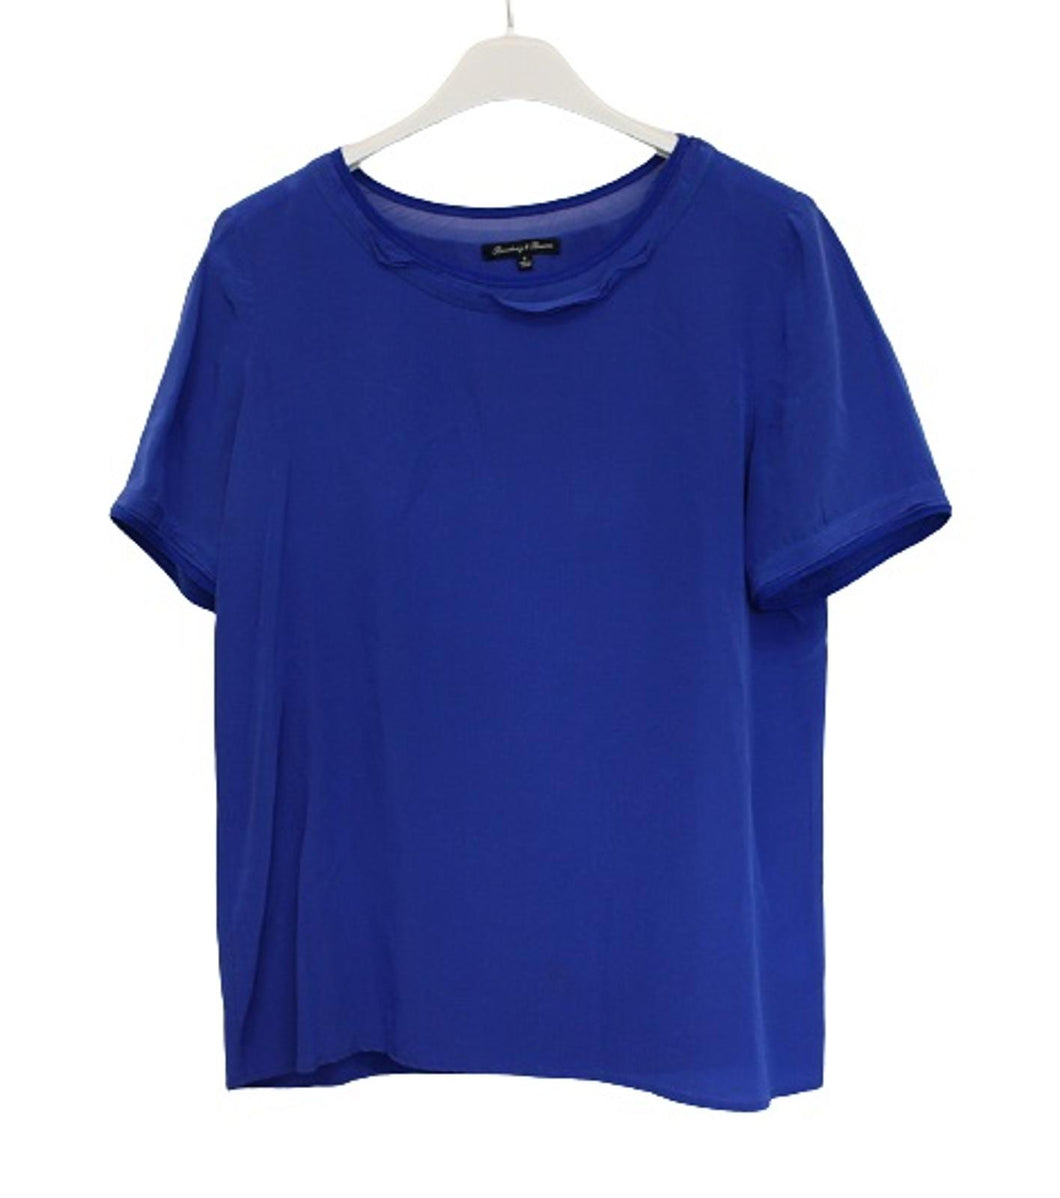 BROADWAY & BROOME Ladies Blue Short Sleeve Lightweight Silk Blouse Top S